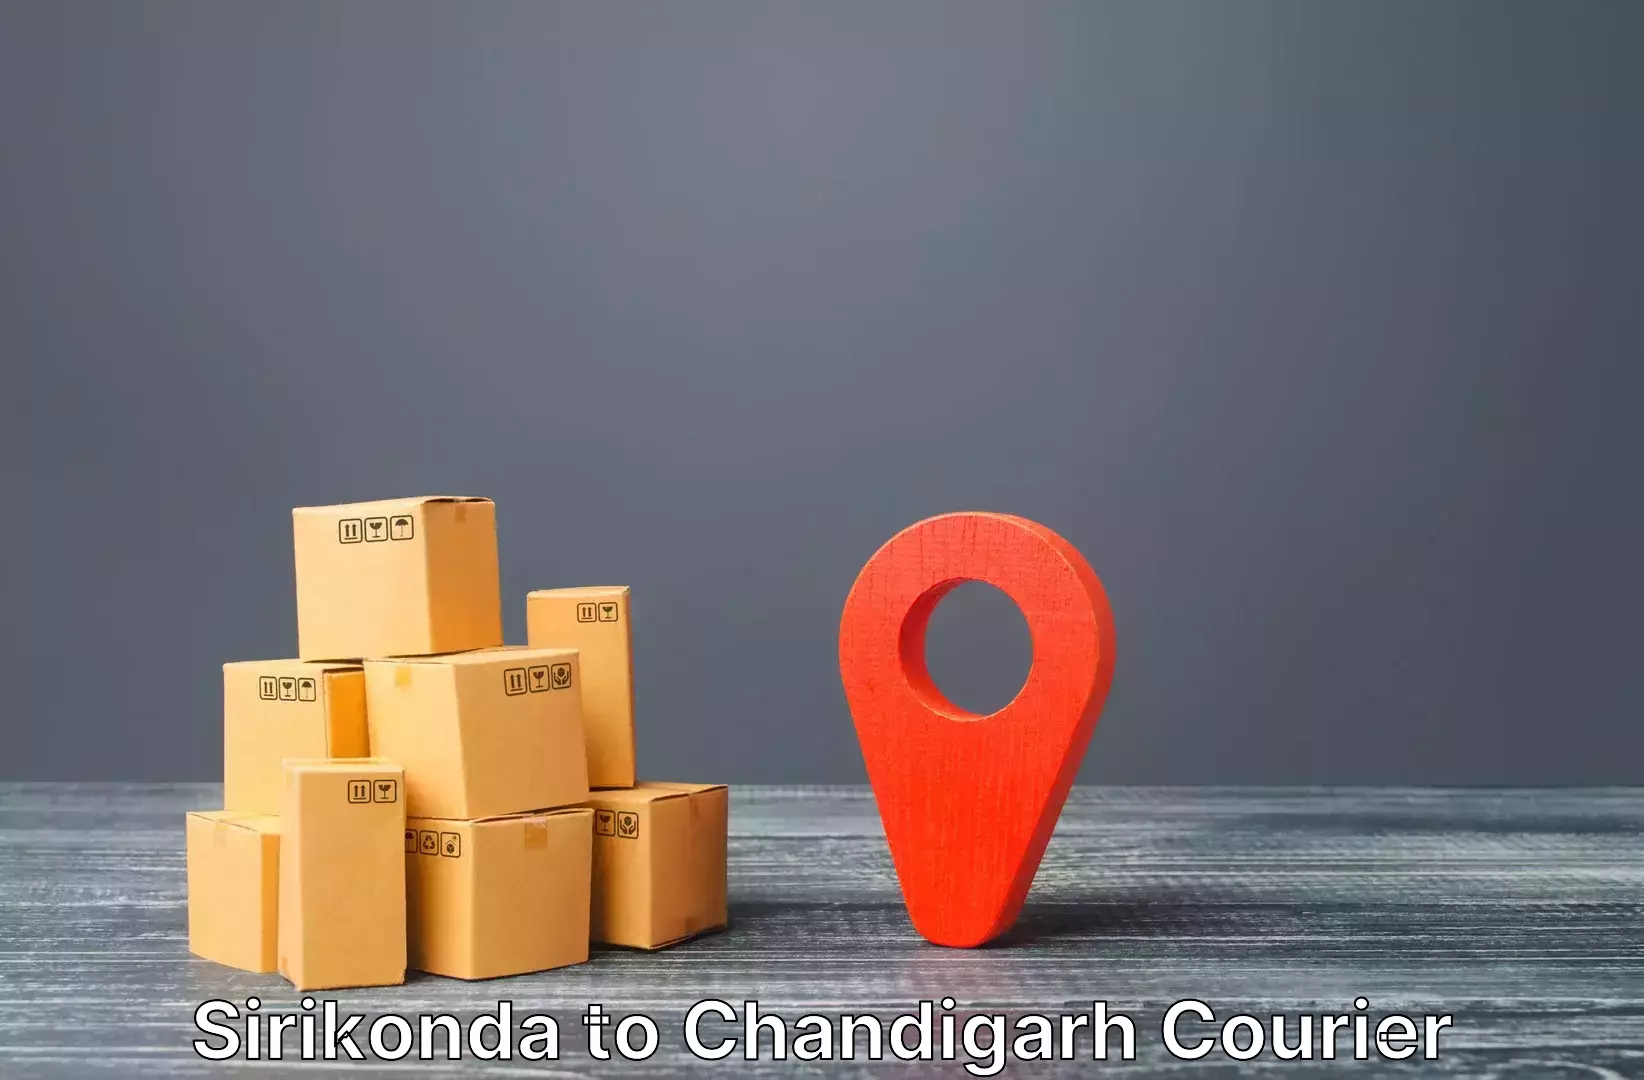 Emergency baggage service Sirikonda to Chandigarh